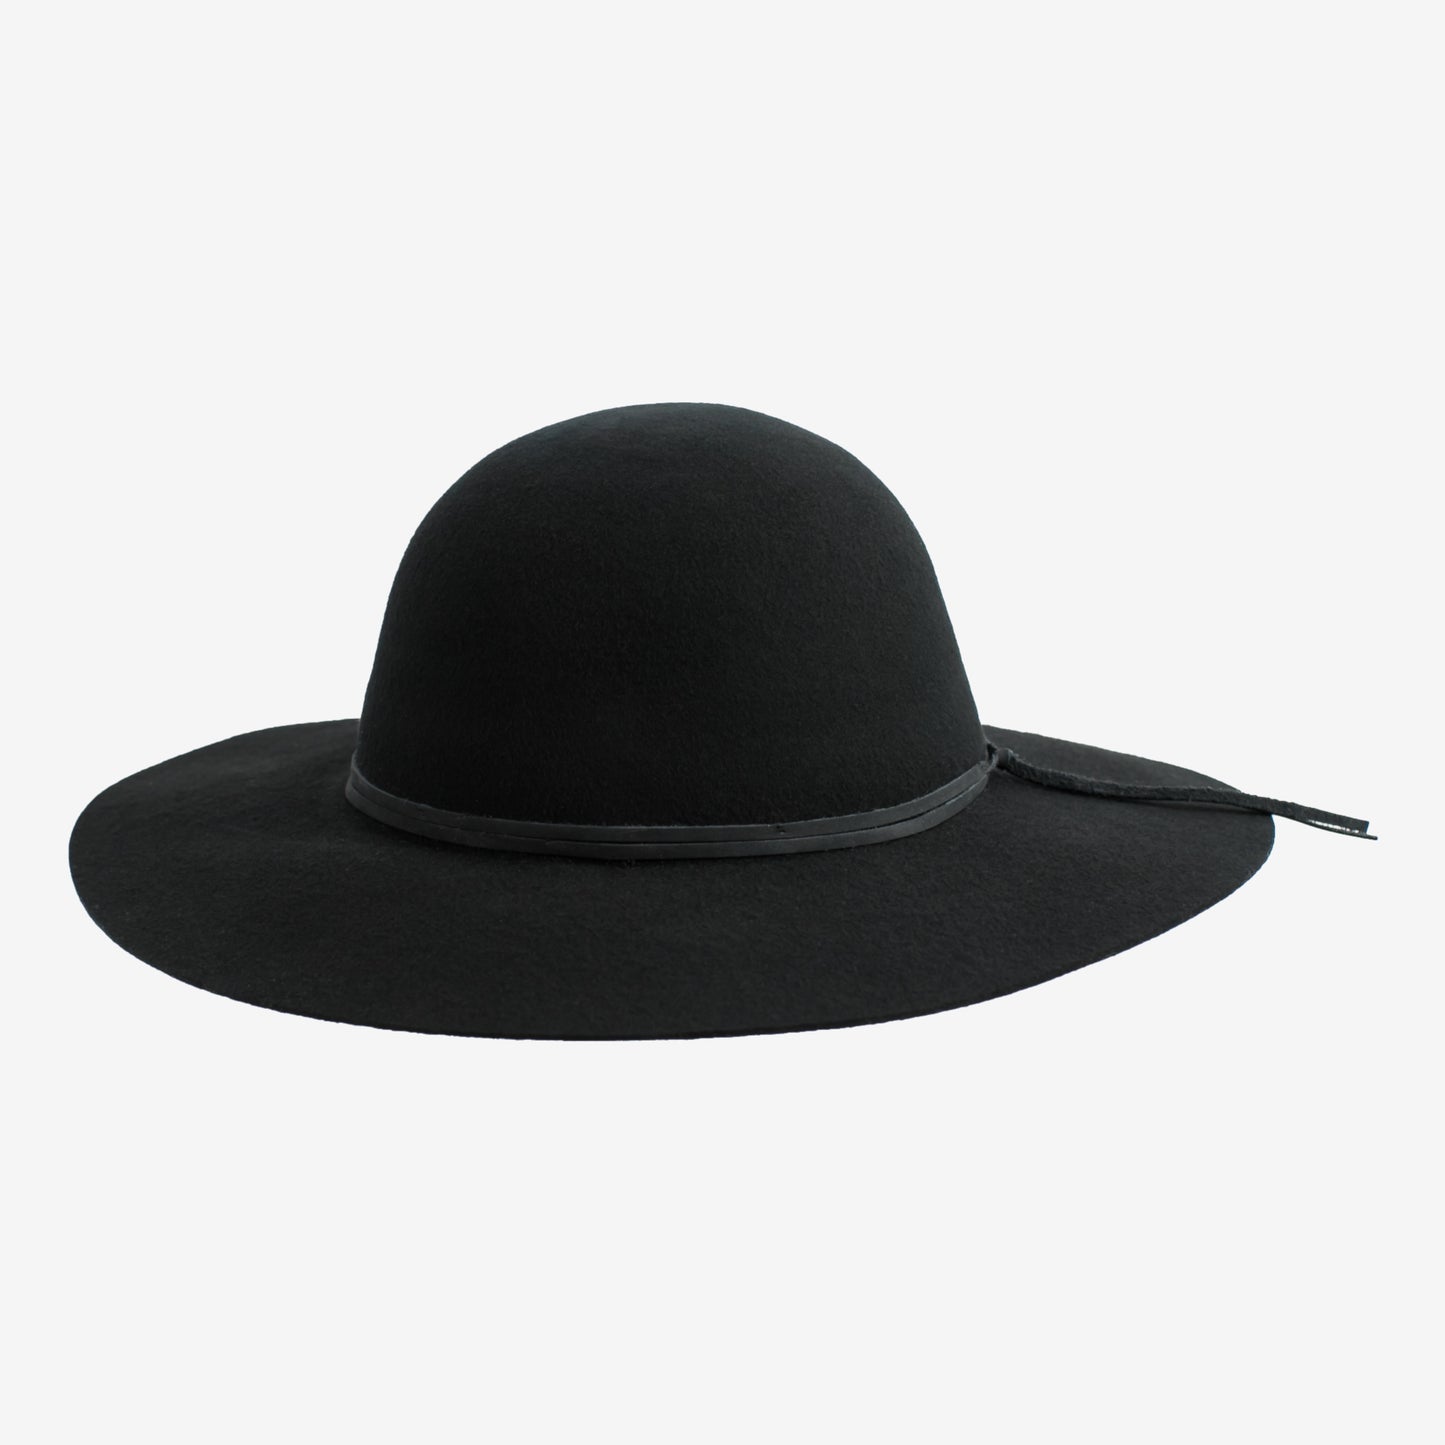 mindo-hats-isabella-round-wool-floppy-hat-black-back